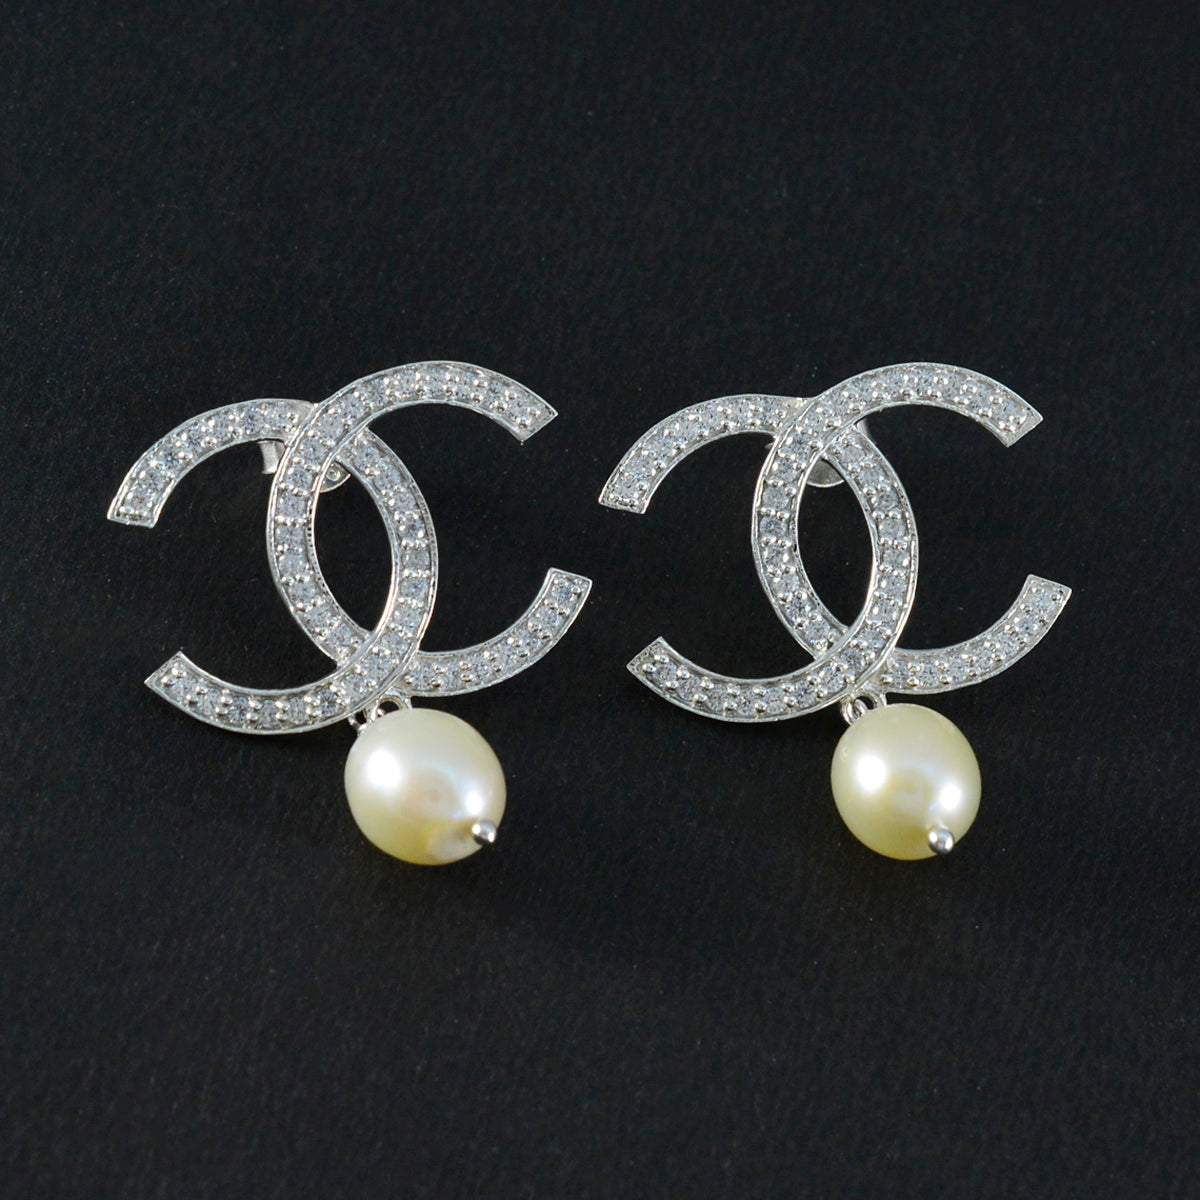 Riyo Bonny 925 Sterling Silber Ohrring Für Femme Perle Ohrring Lünette Einstellung Weiß Ohrring Bolzen Ohrring